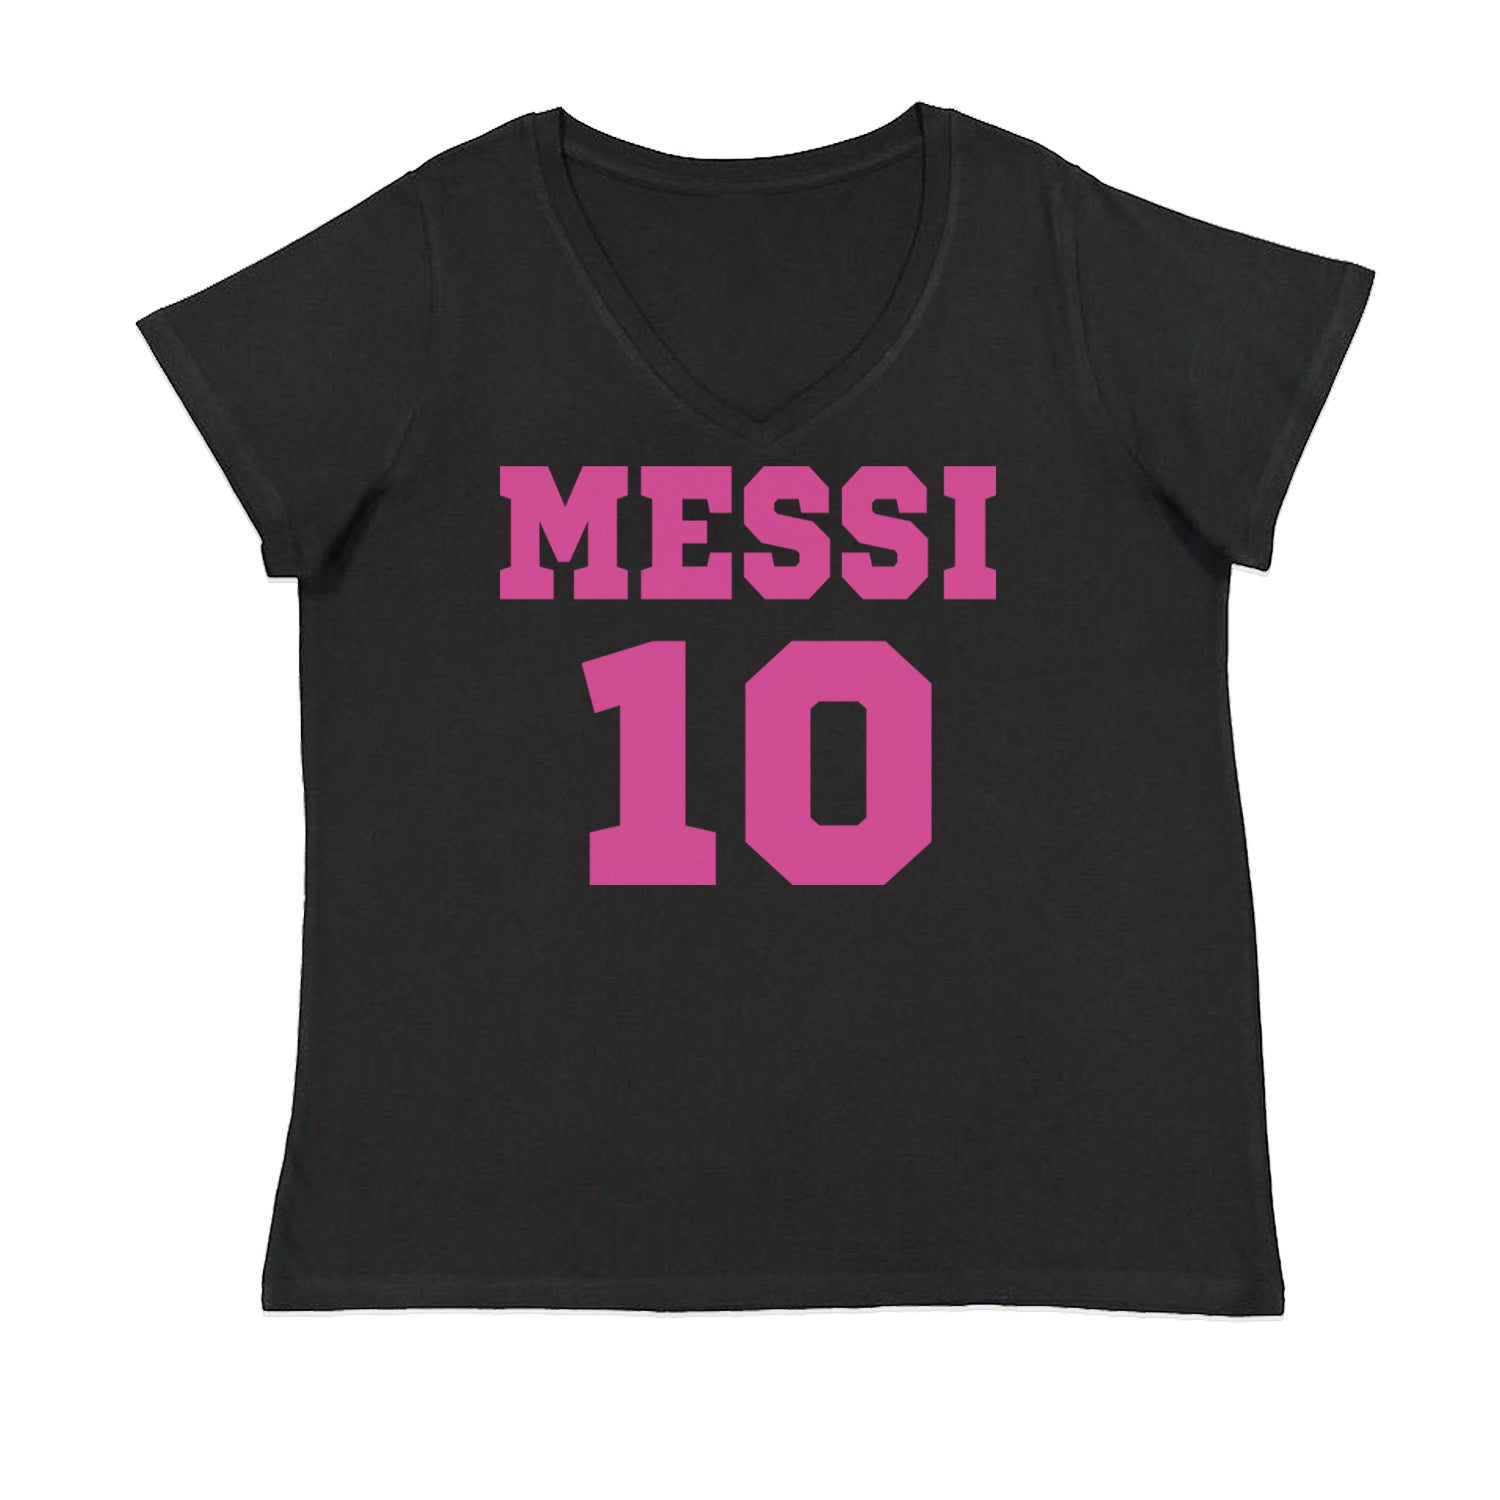 Messi World Soccer Futbol Messiami Womens Plus Size V-Neck T-shirt